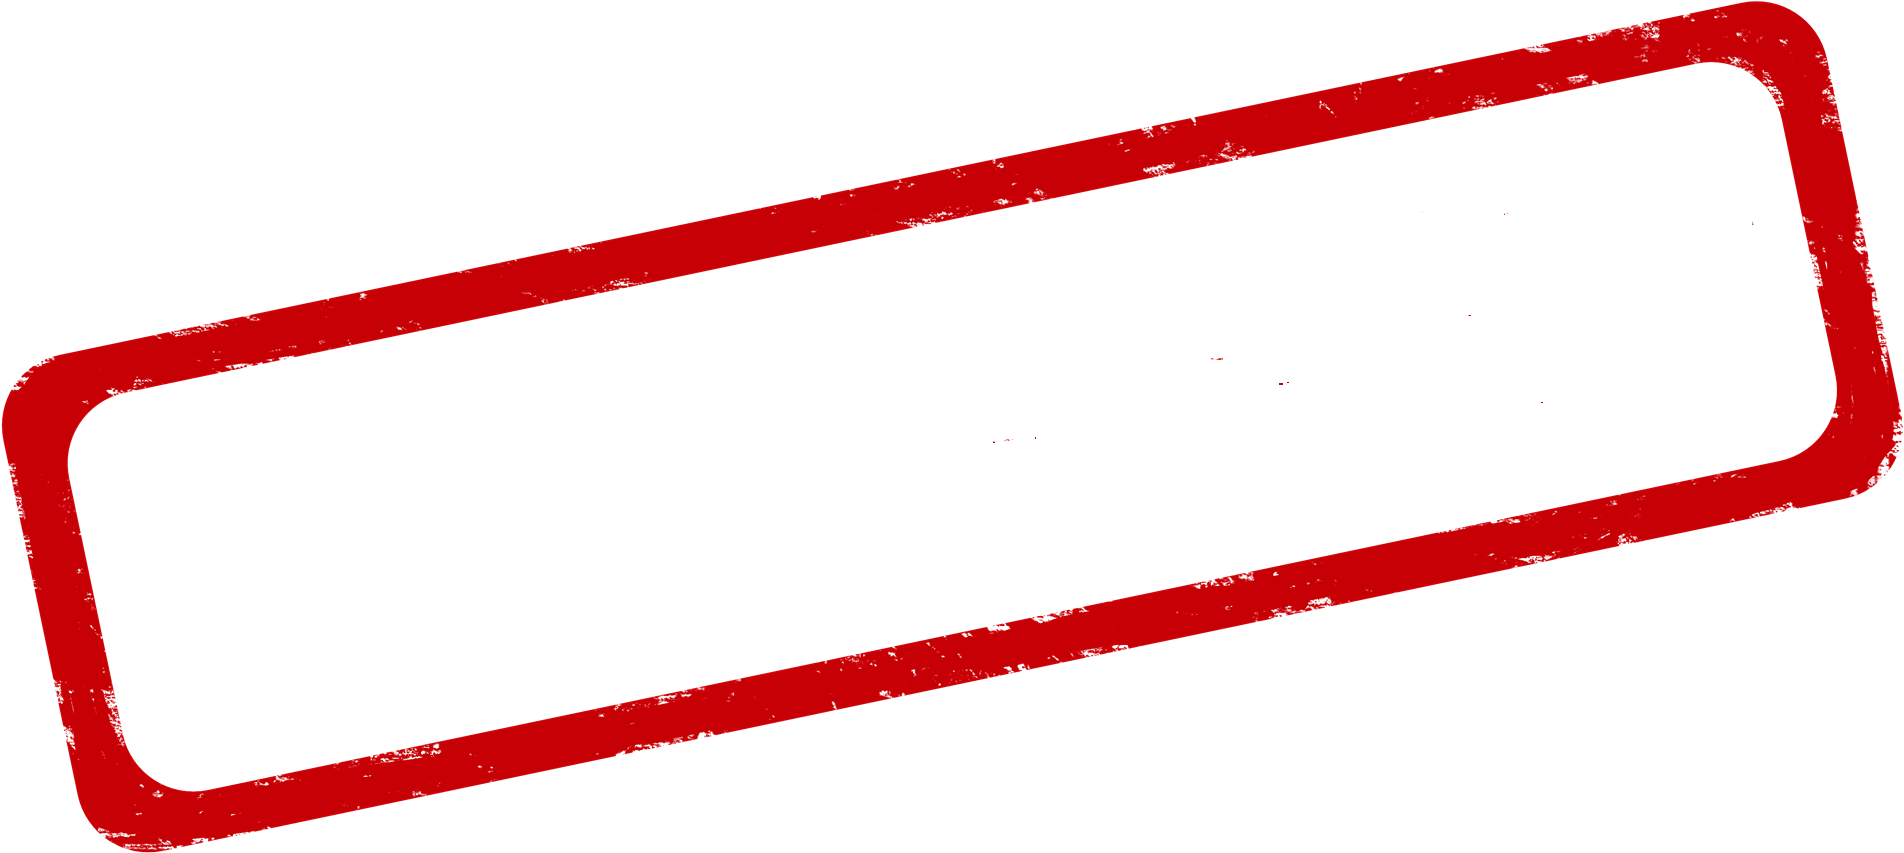 Red Stamp Outline PNG image